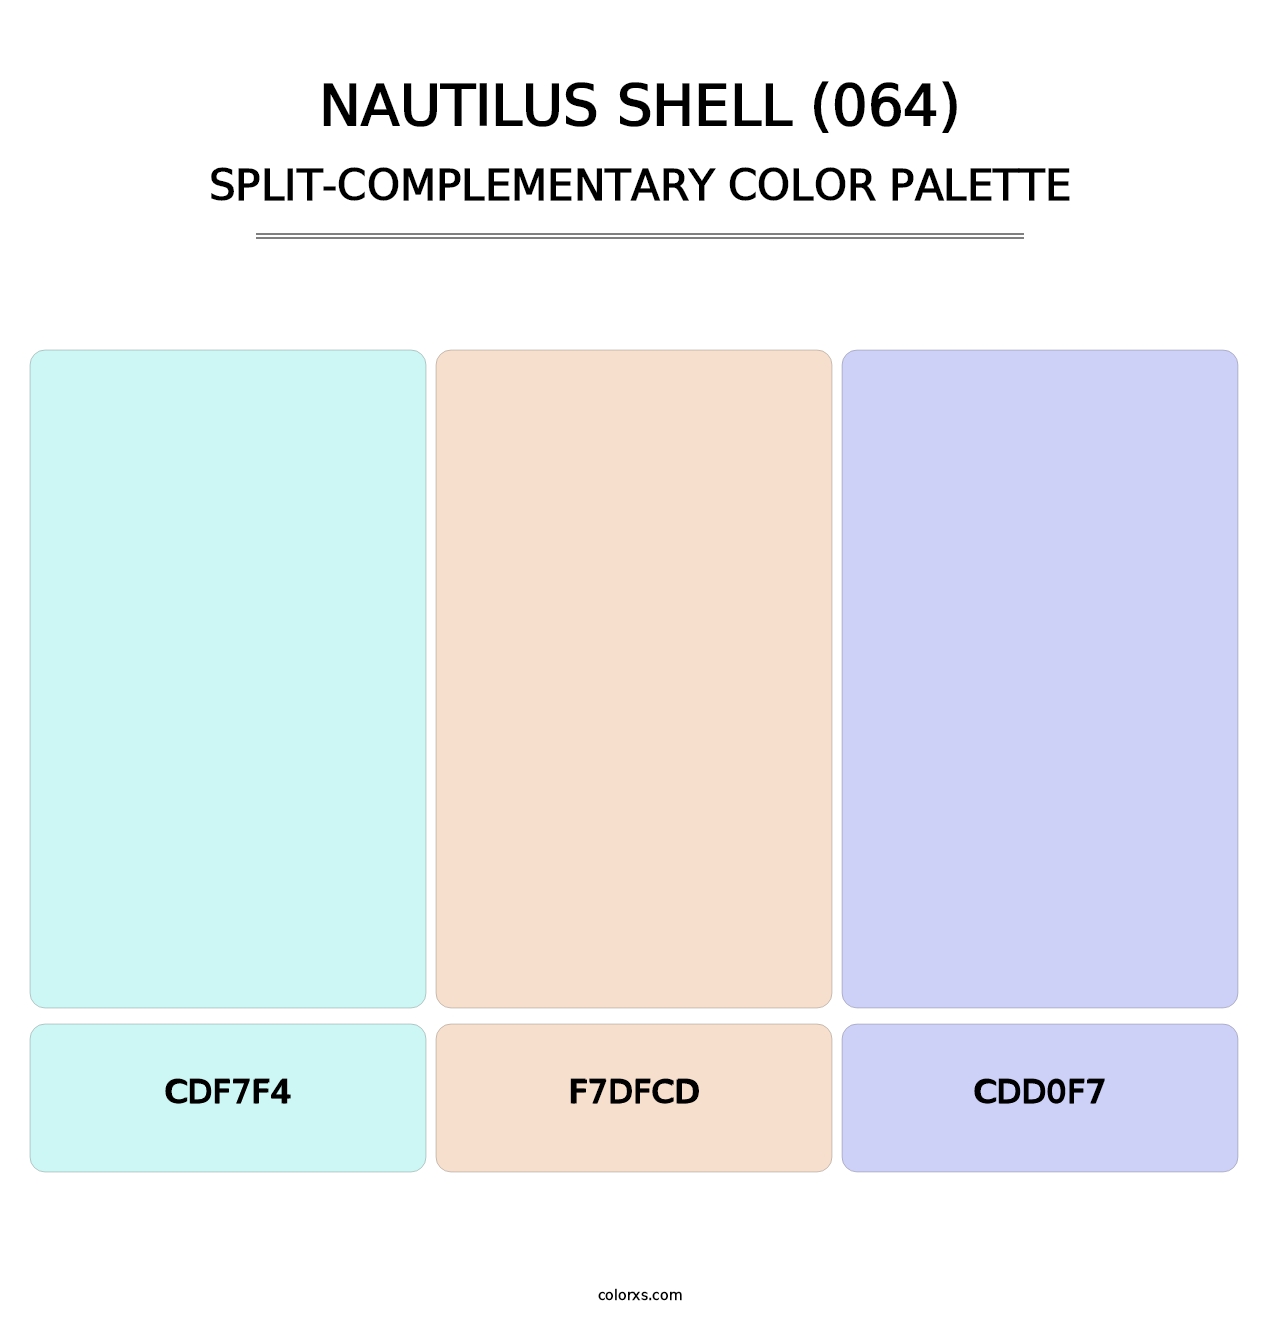 Nautilus Shell (064) - Split-Complementary Color Palette